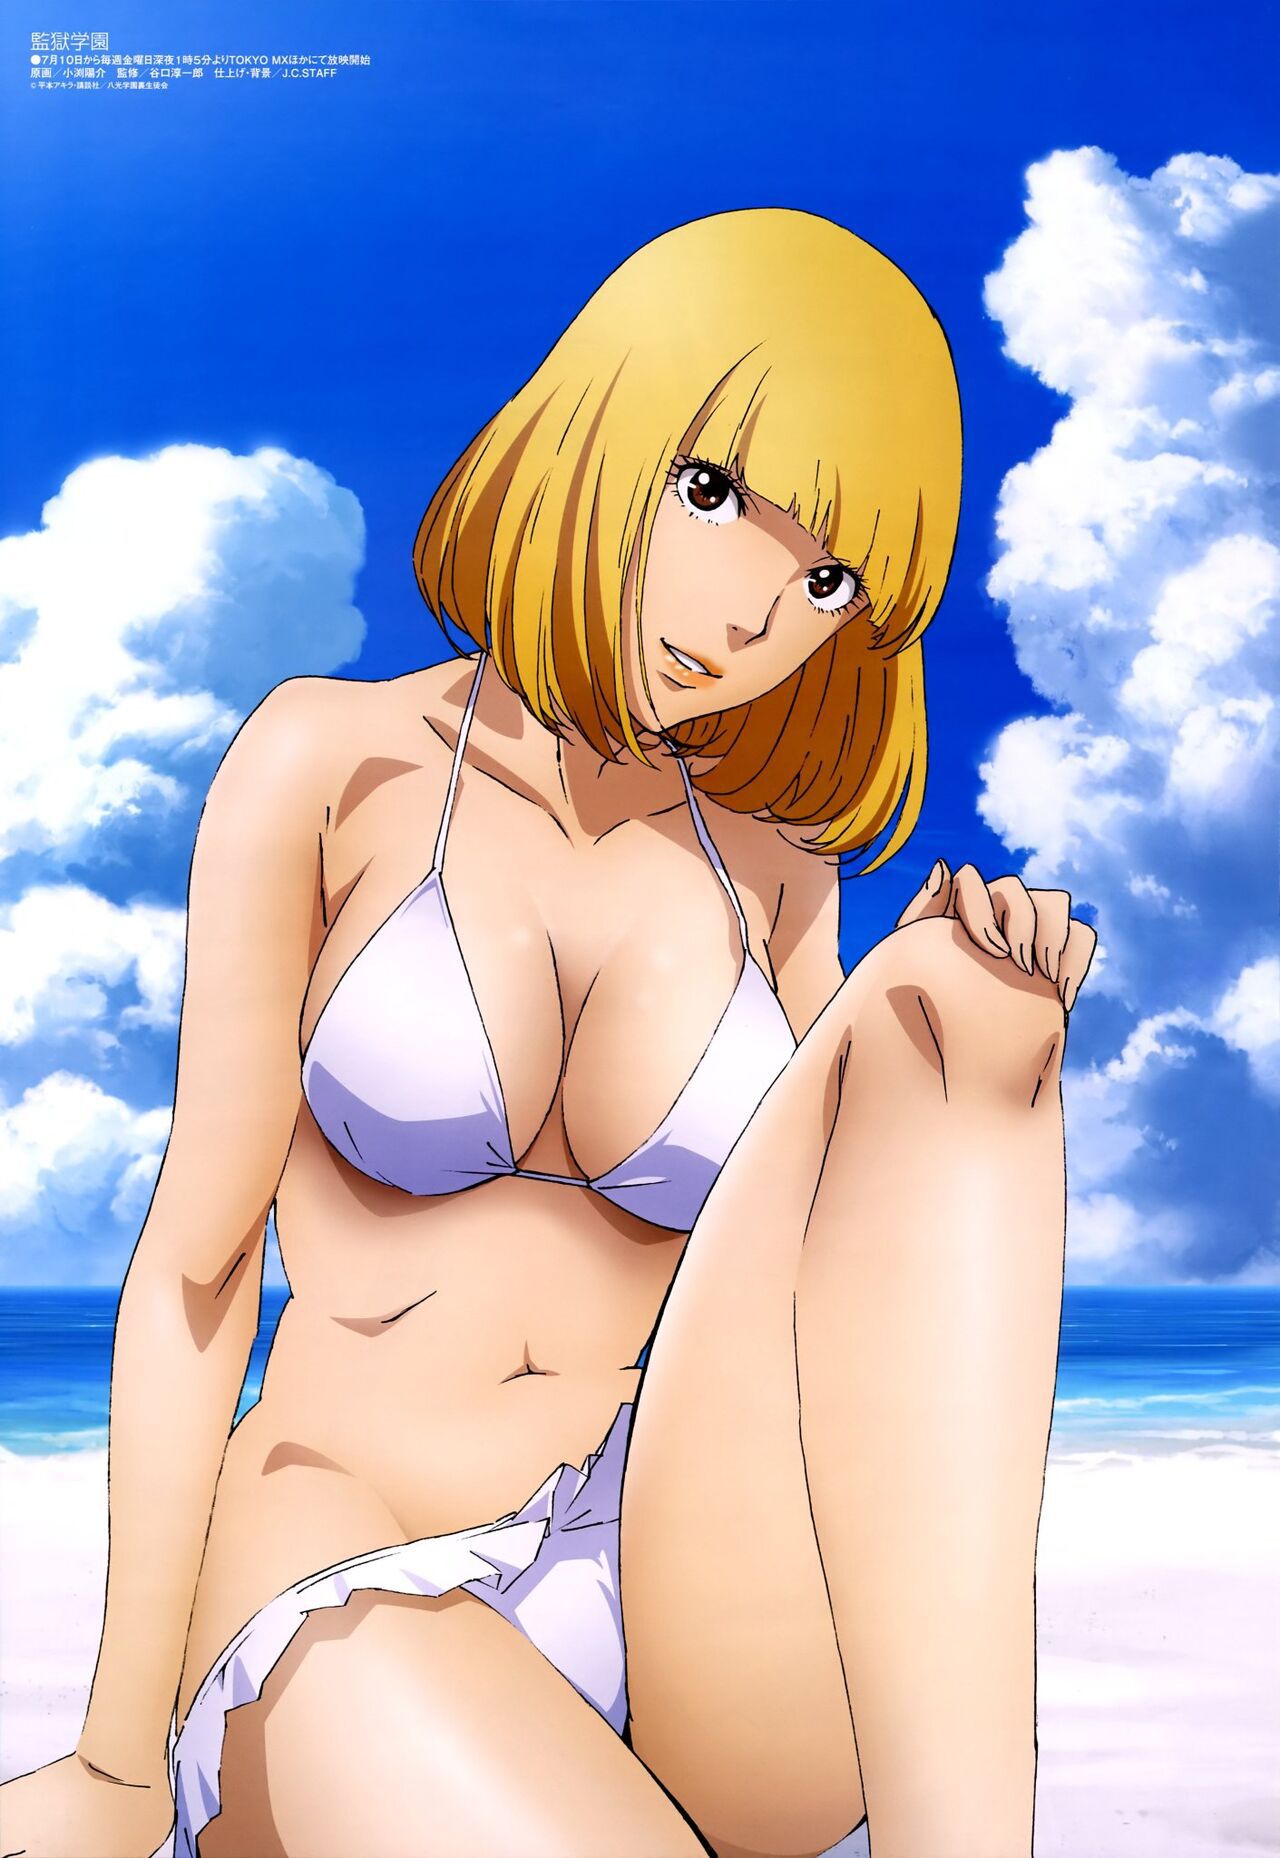 Anime girls in bikinis 89